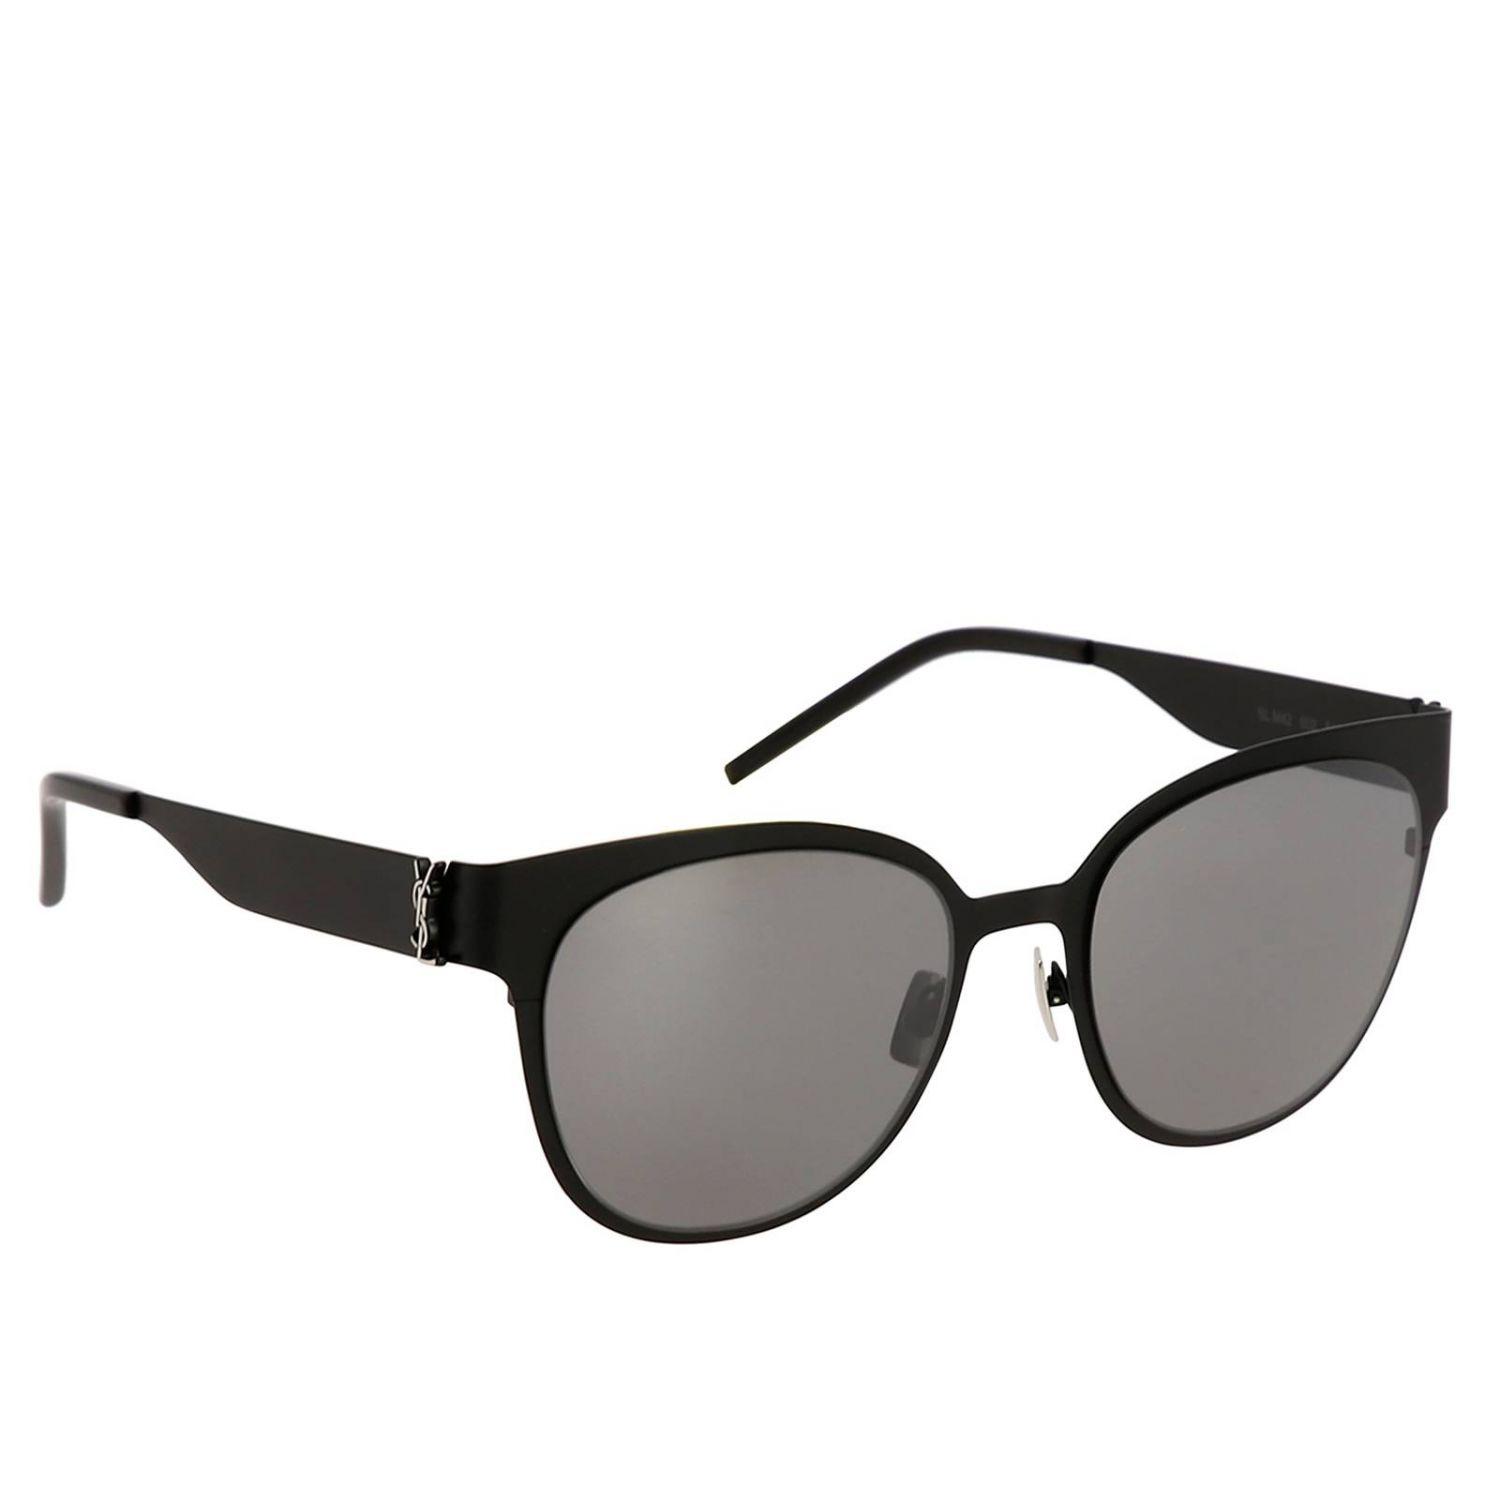 Saint Laurent Sunglasses Women in Black - Lyst